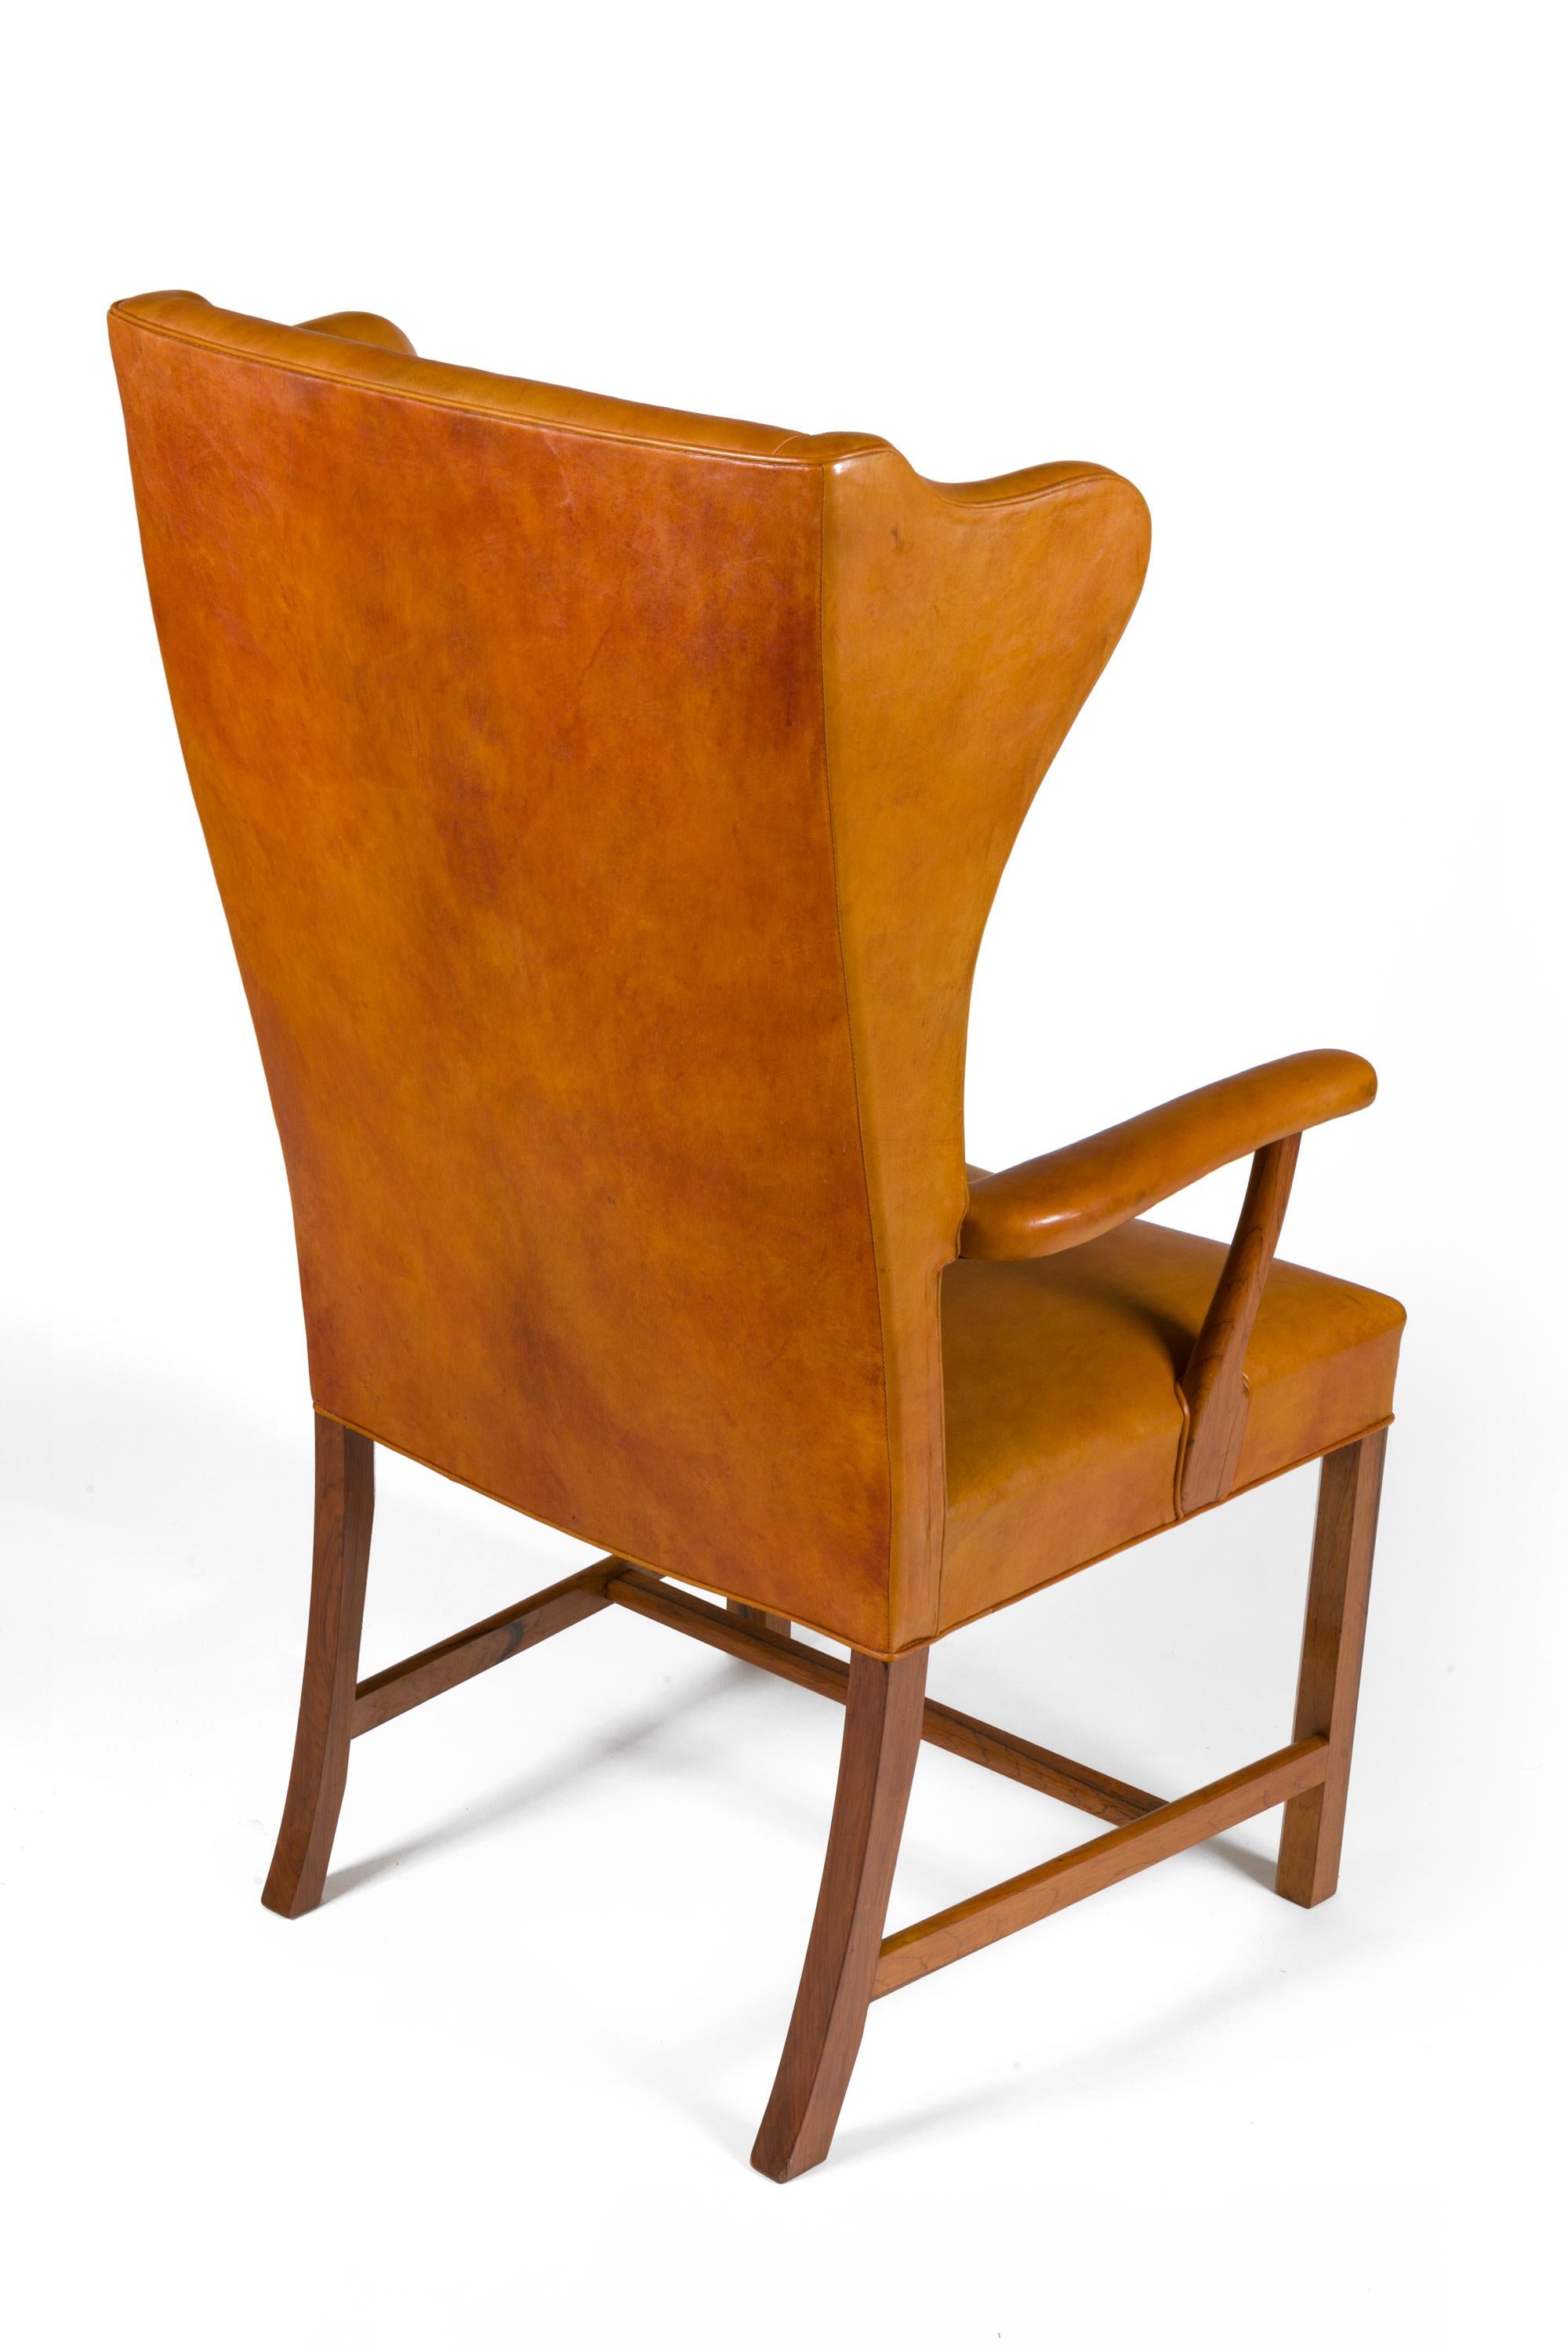 Danish Borge Mogensen Vintage Leather High Back Arm Chair, Denmark 1947